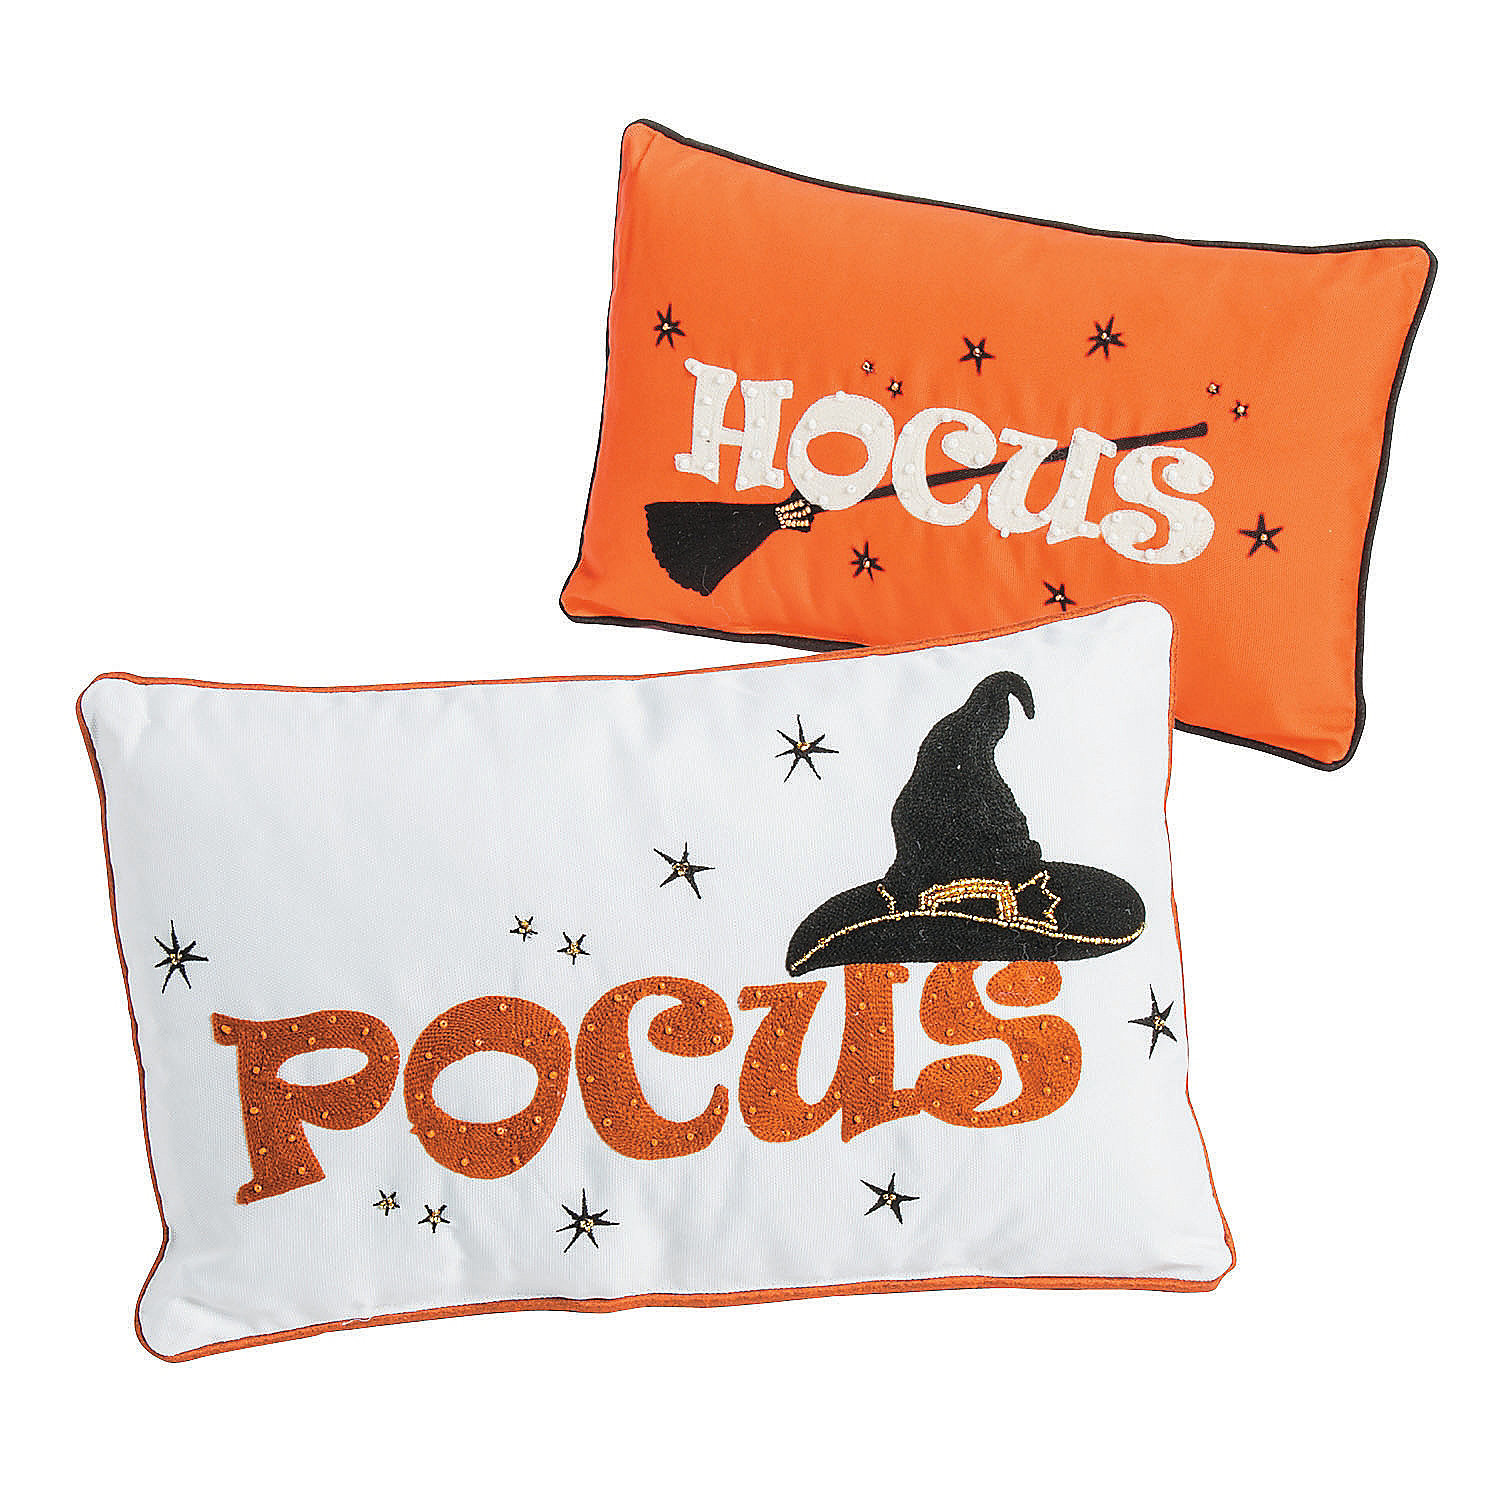 Outdoor Halloween Pillows
 Hocus Pocus Outdoor Throw Pillows Halloween Decorations